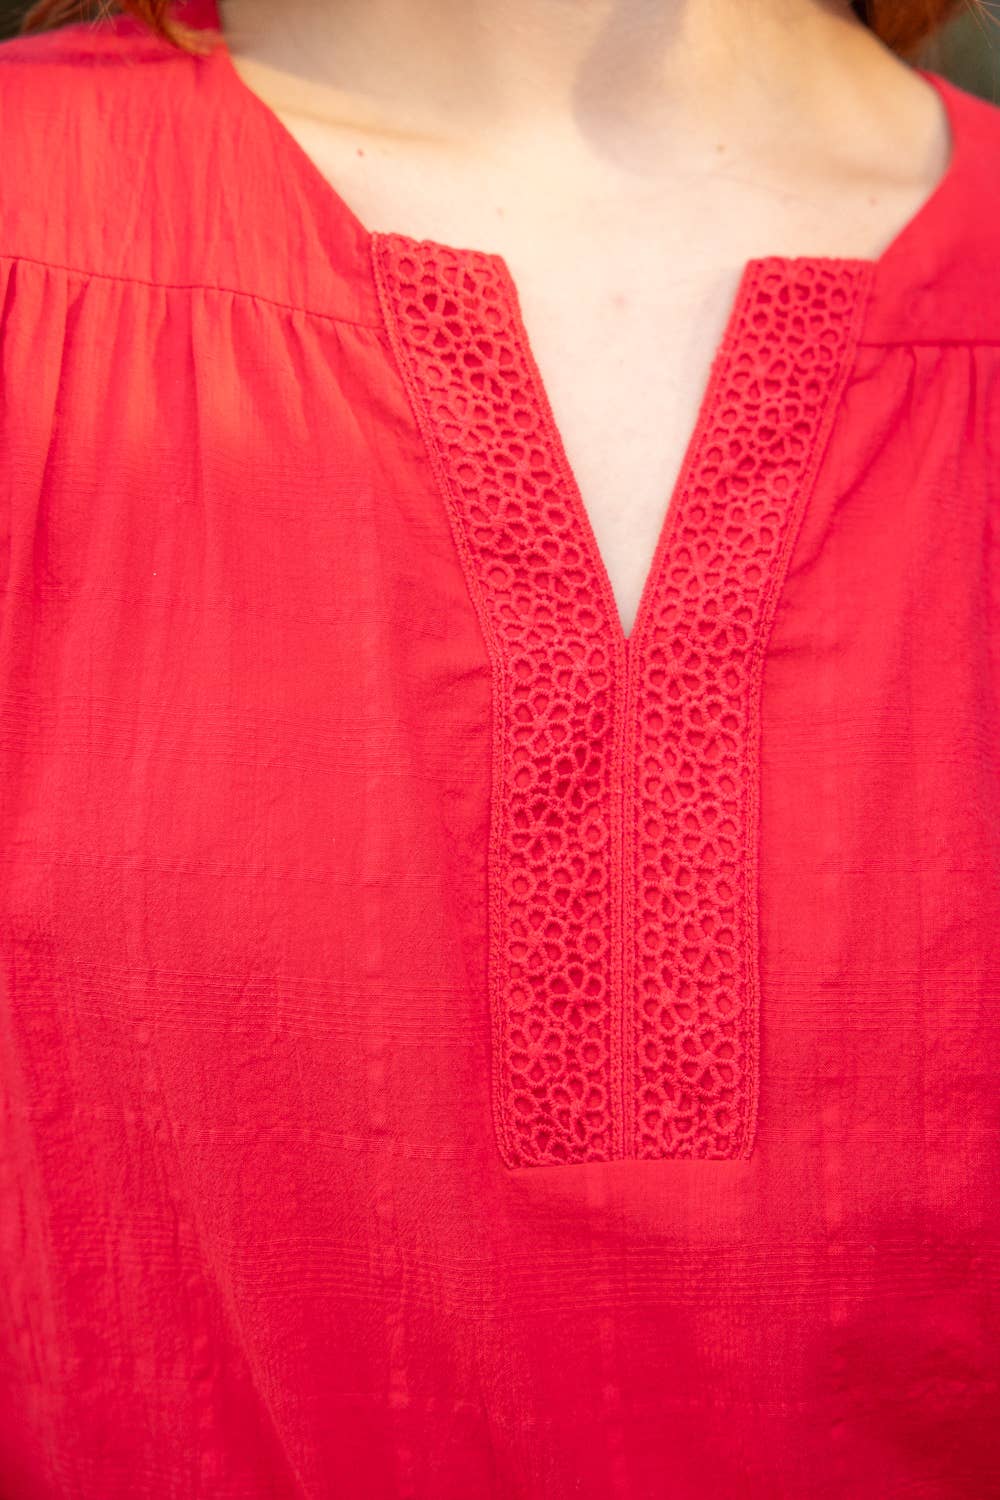 Lace Detailed V Neck Short Sleeve Red Top Spring-Summer VOY